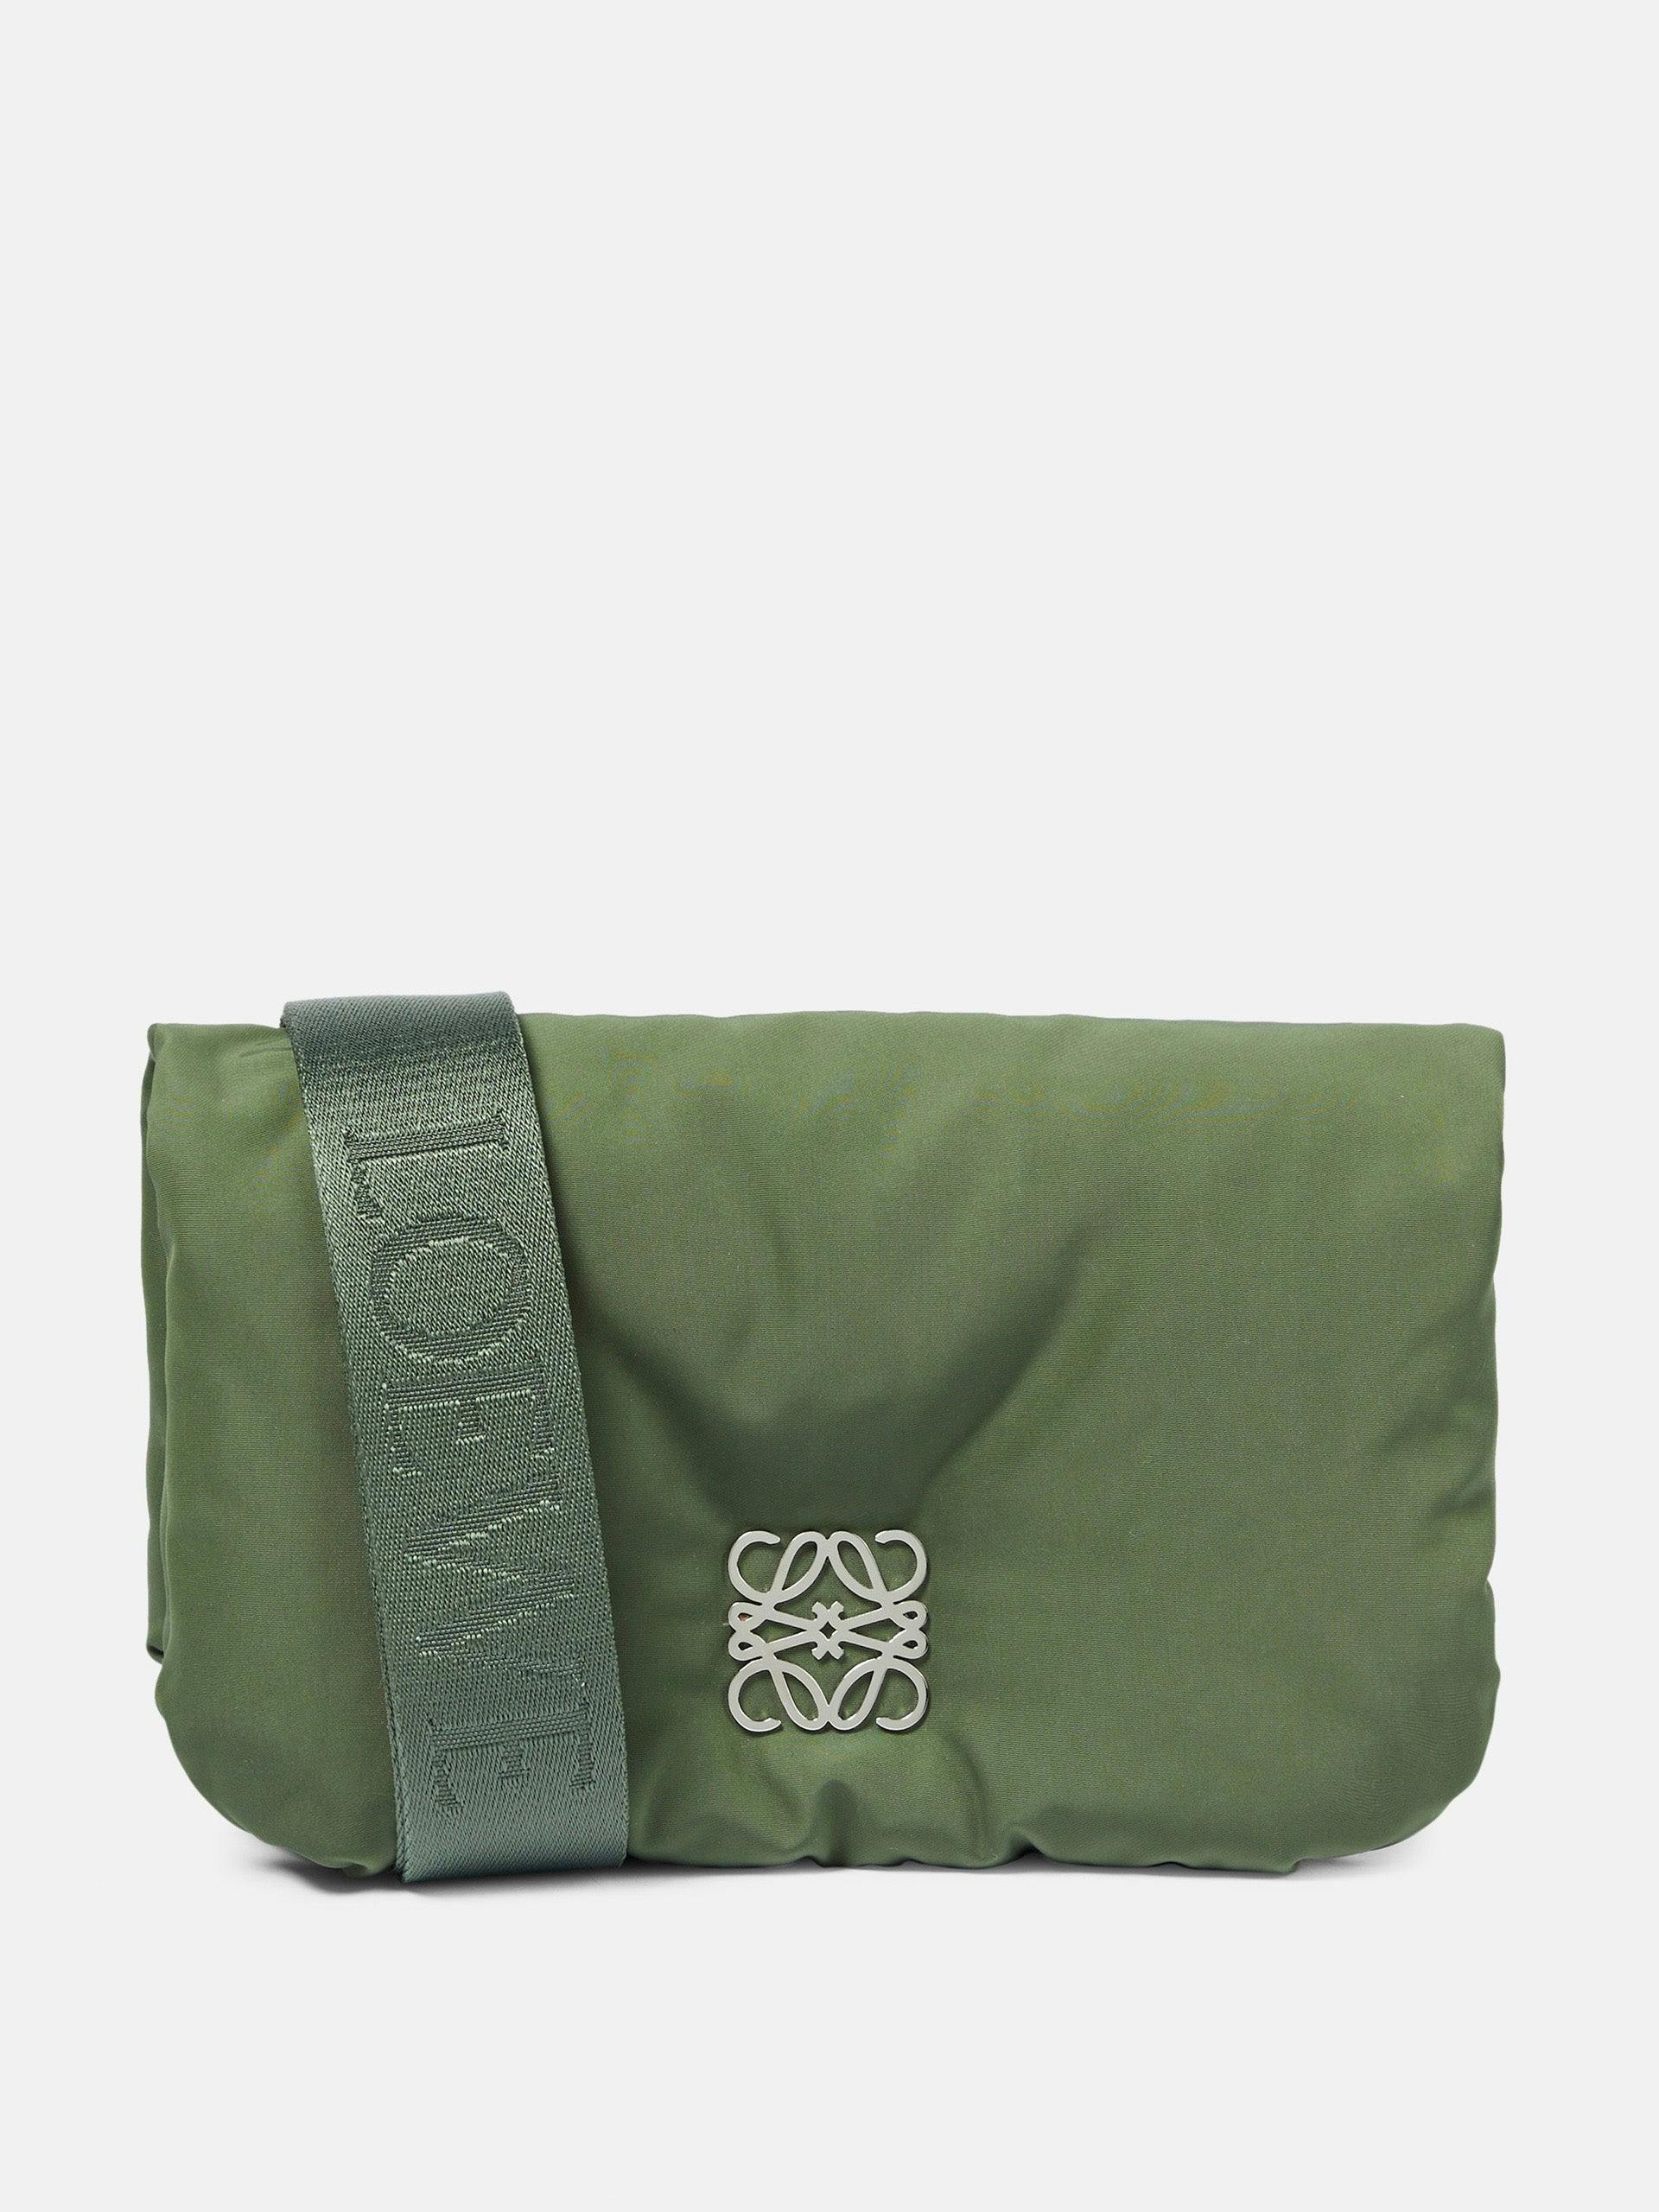 Green puffer shoulder bag